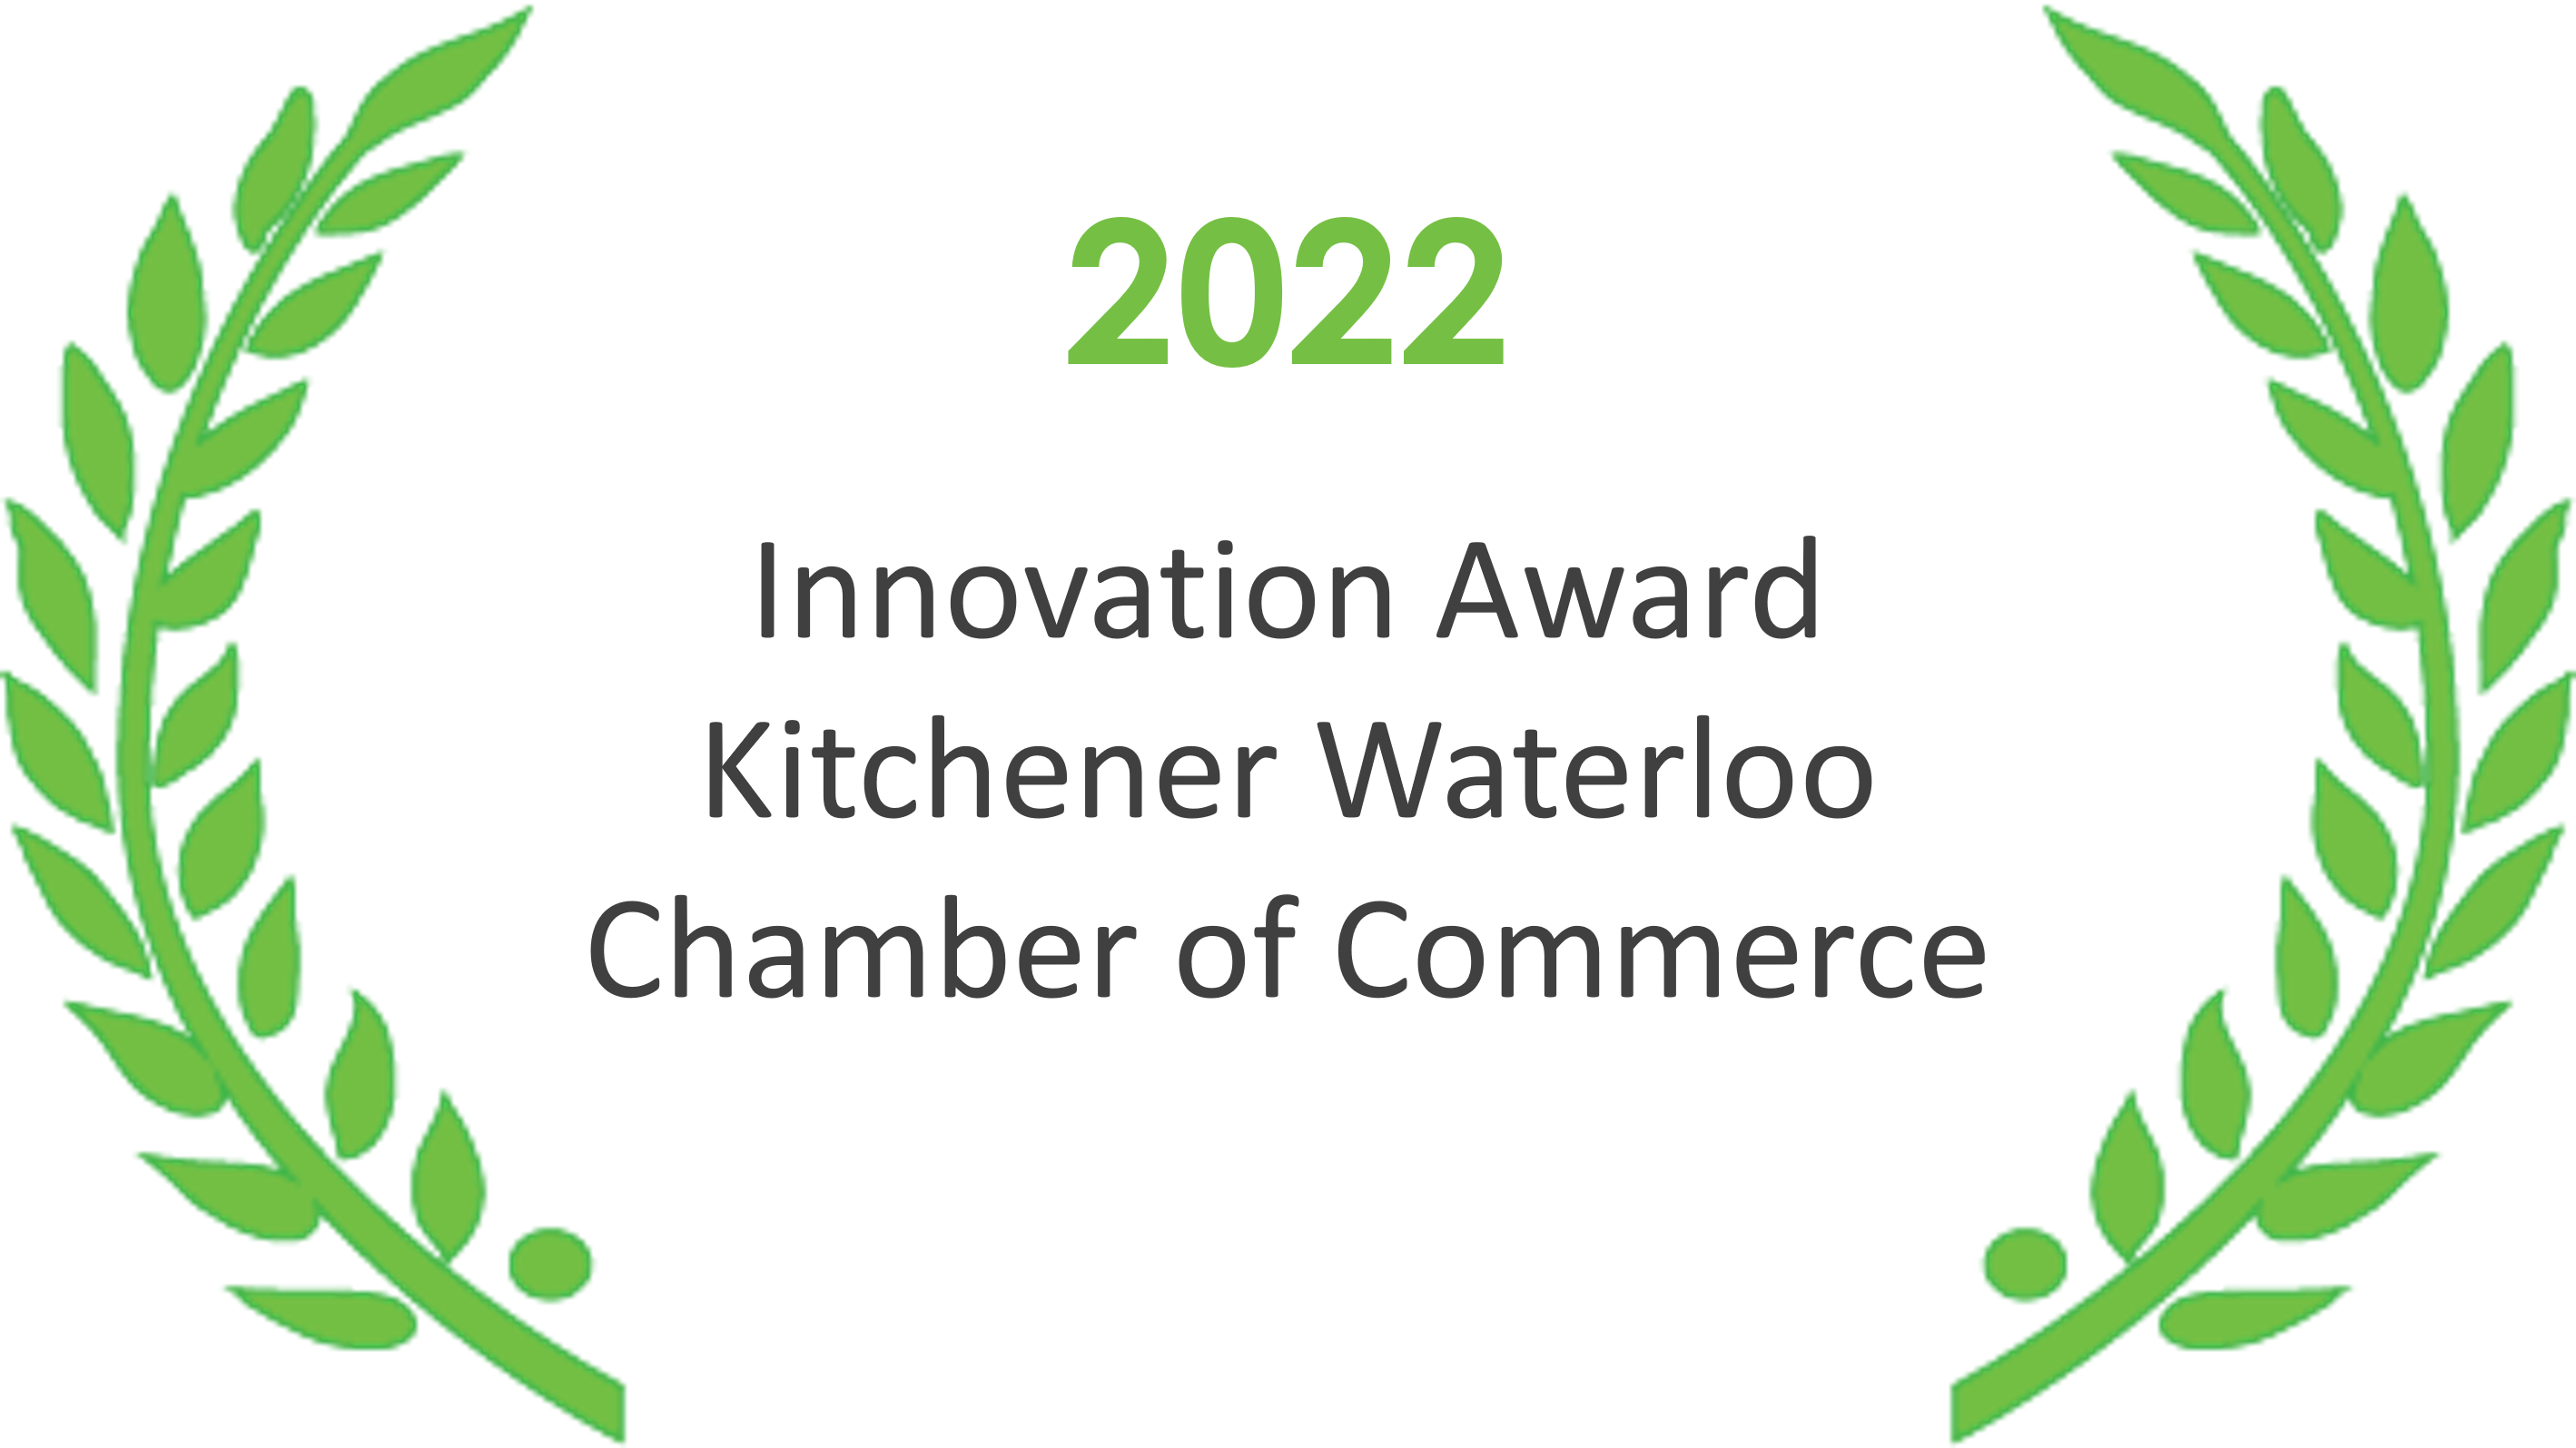 2022 Innovation Award Kitchener Waterloo Chamber of Commerce